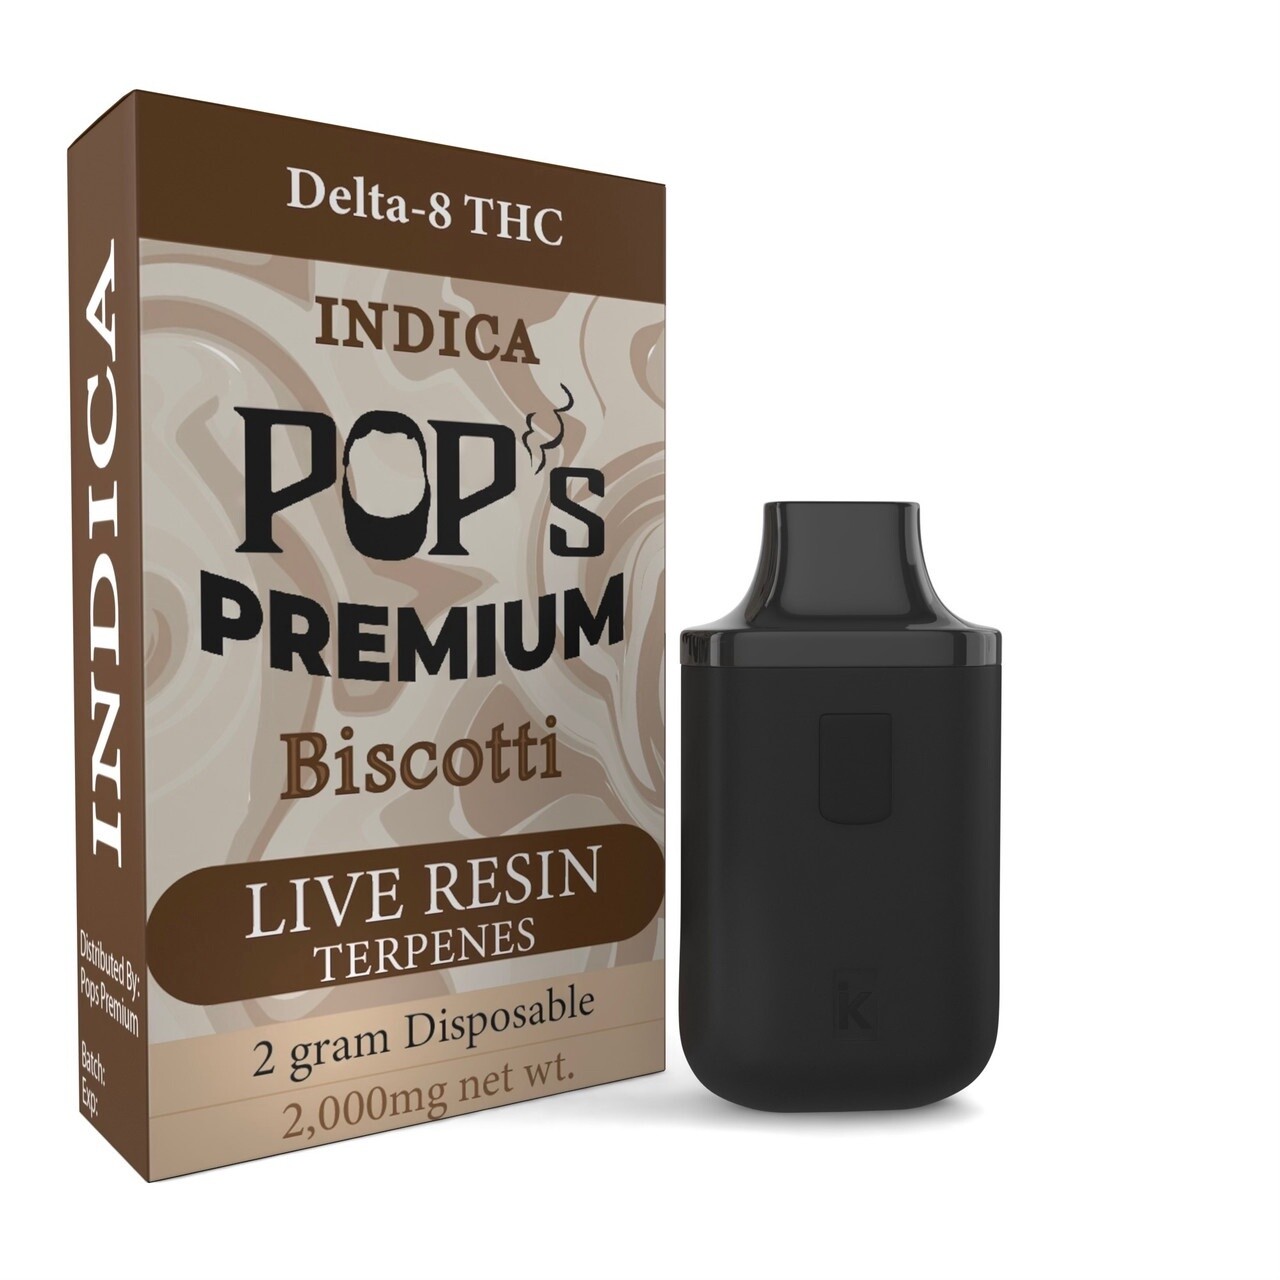 Pop's Premium Biscotti Live Resin Delta 8 Disposable - 2g